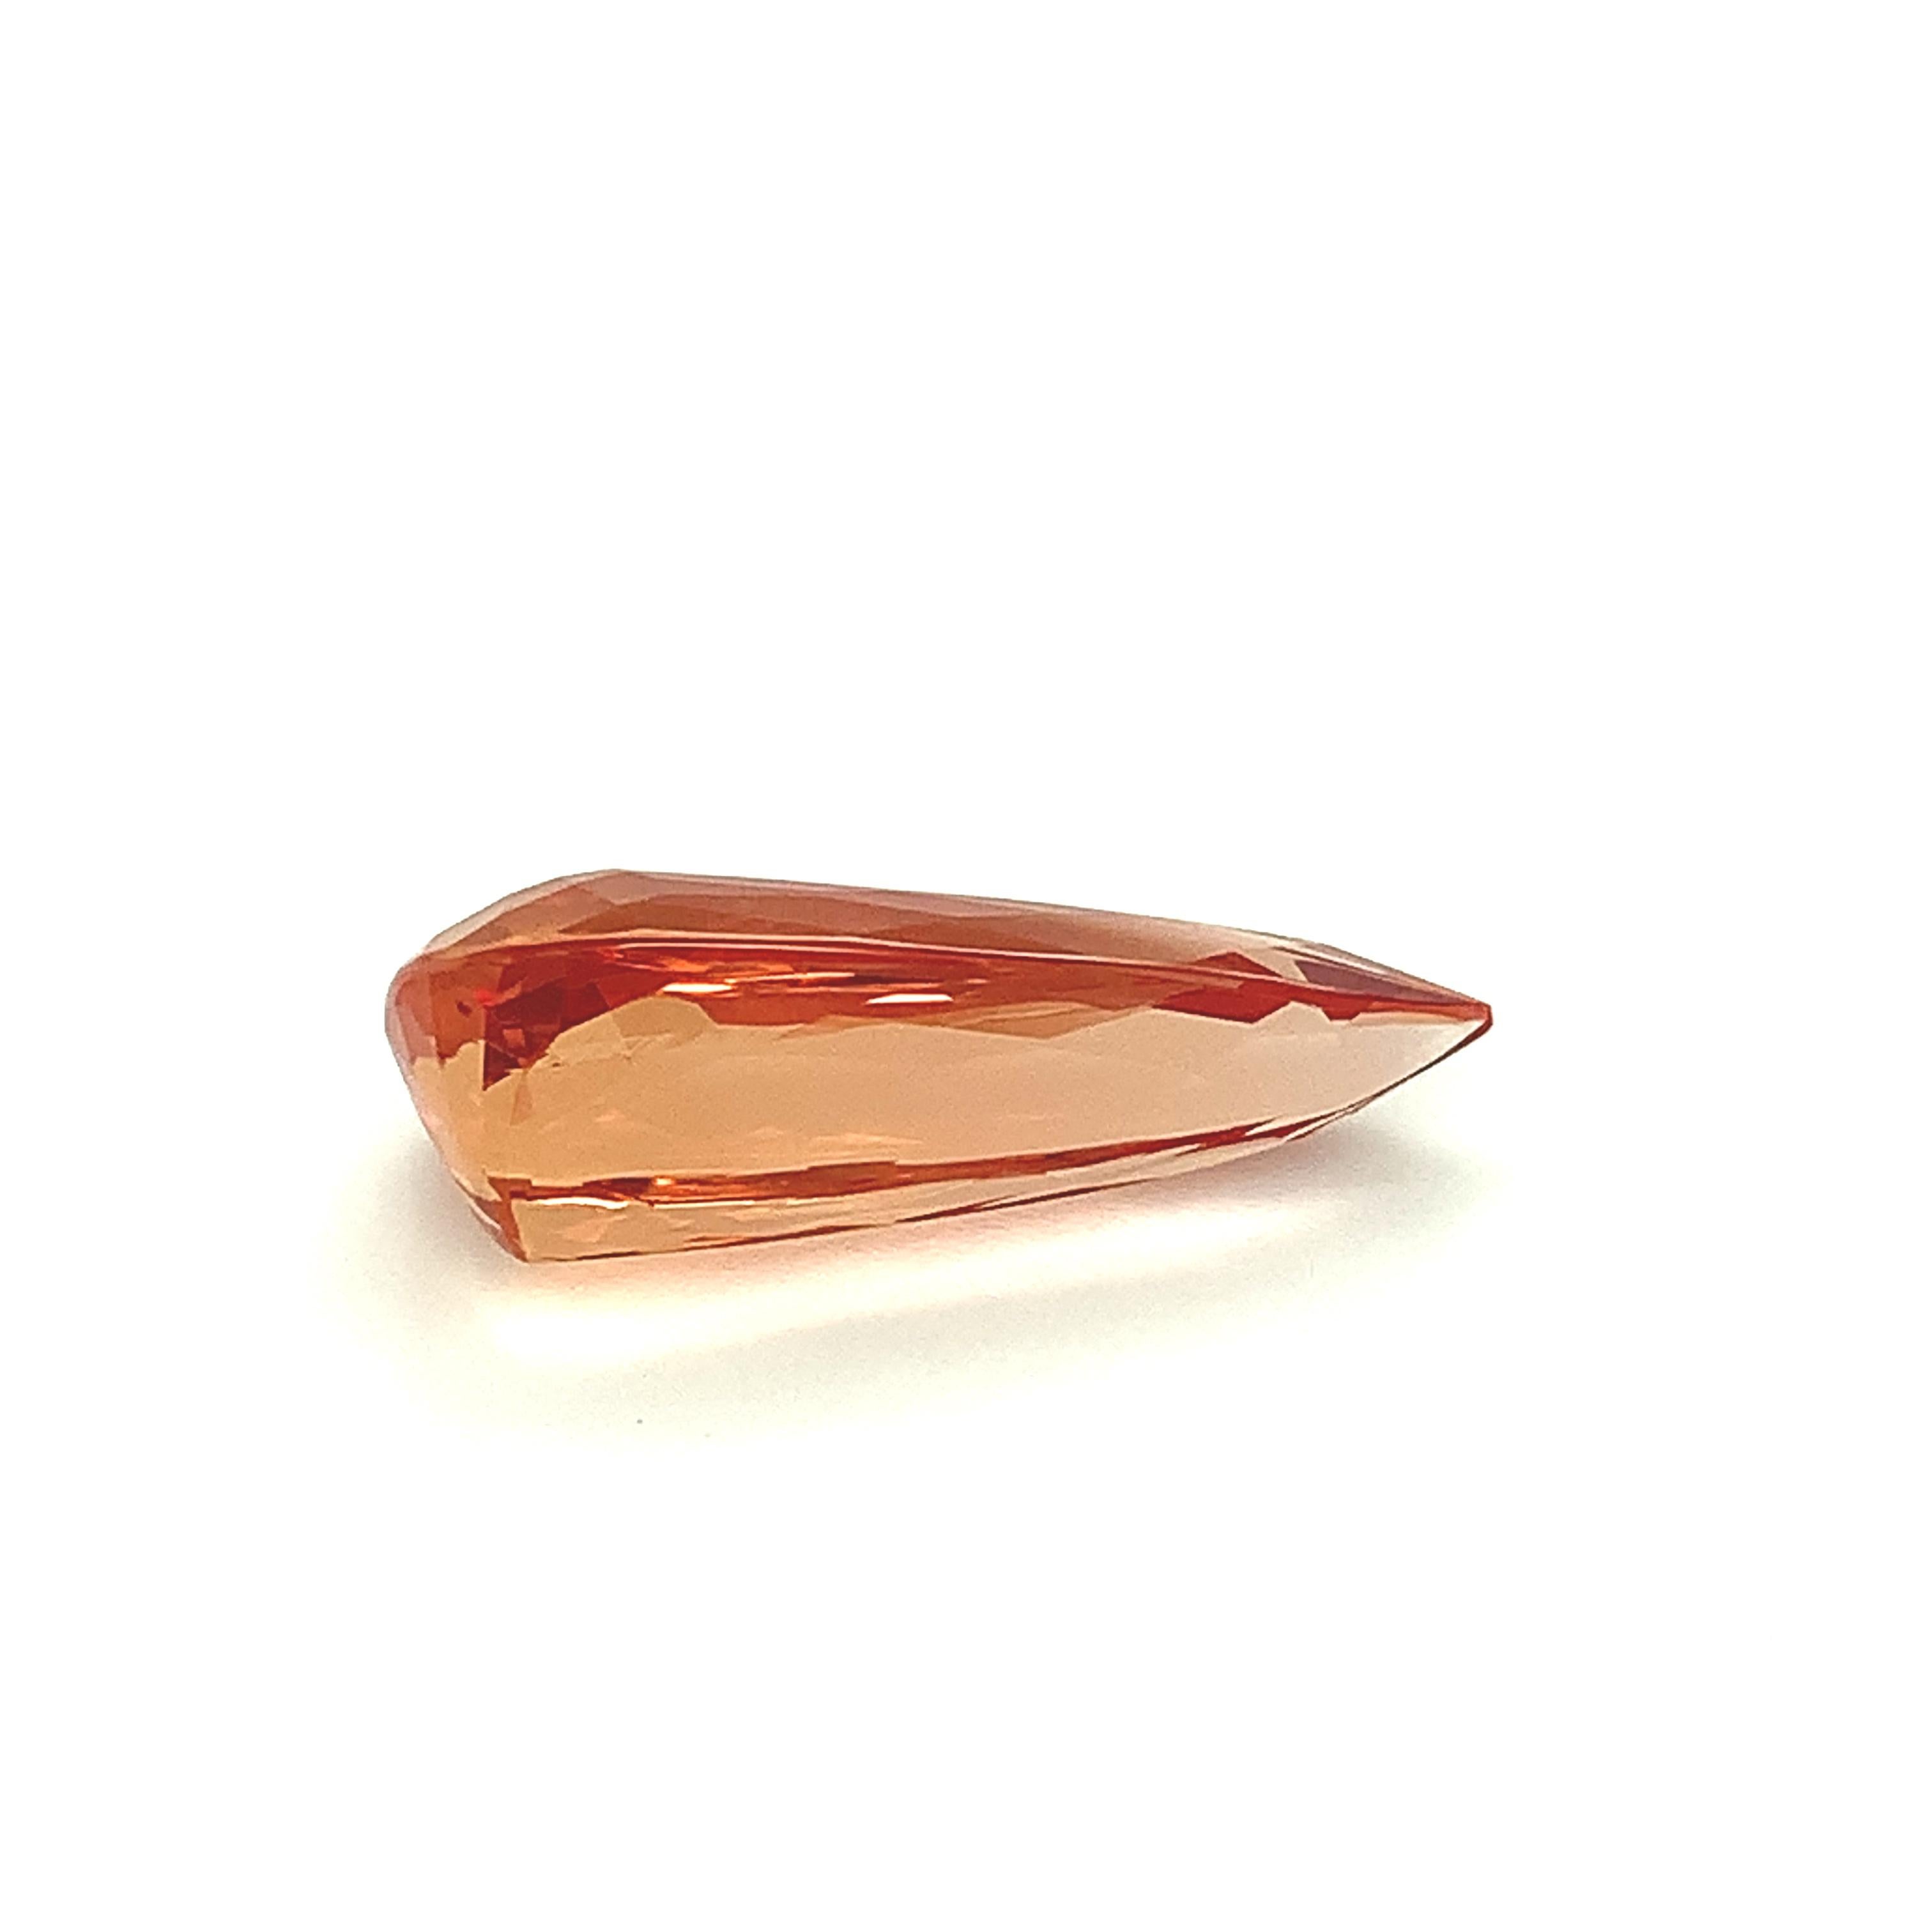 Topaze impériale orange 15,90 carats, pierre précieuse non sertie, certifiée GIA en vente 2